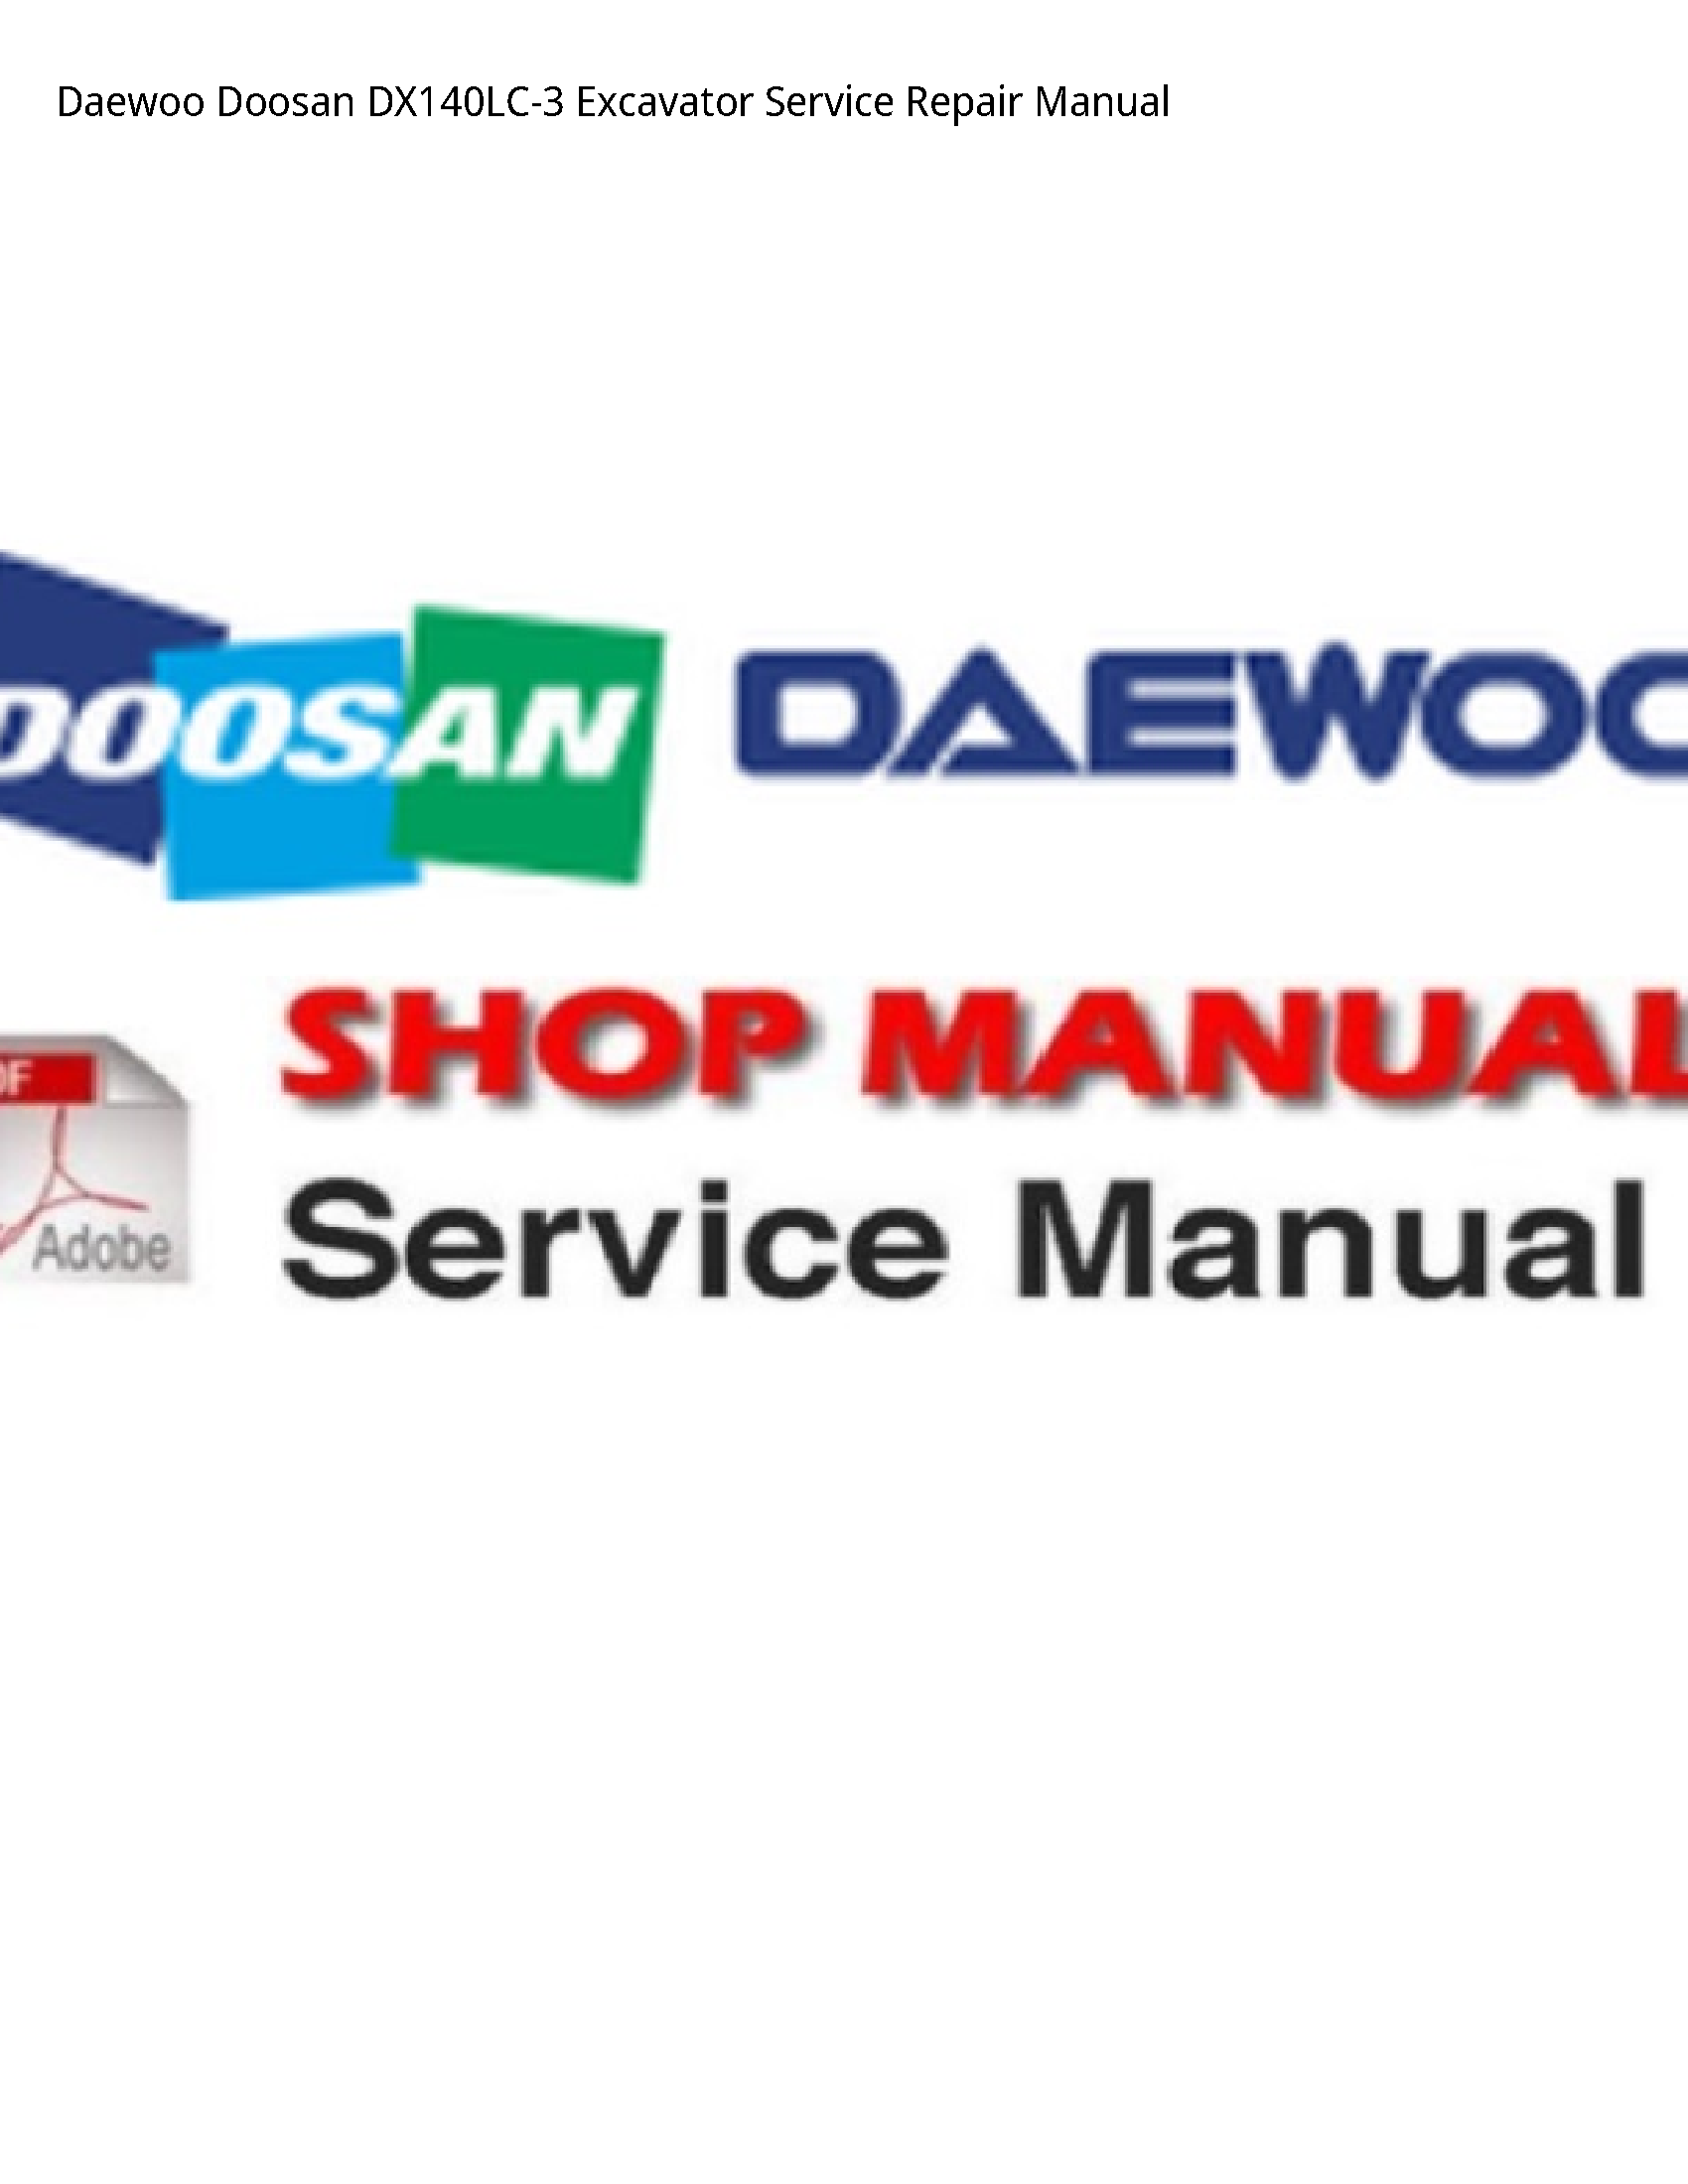 Daewoo Doosan DX140LC-3 Excavator manual